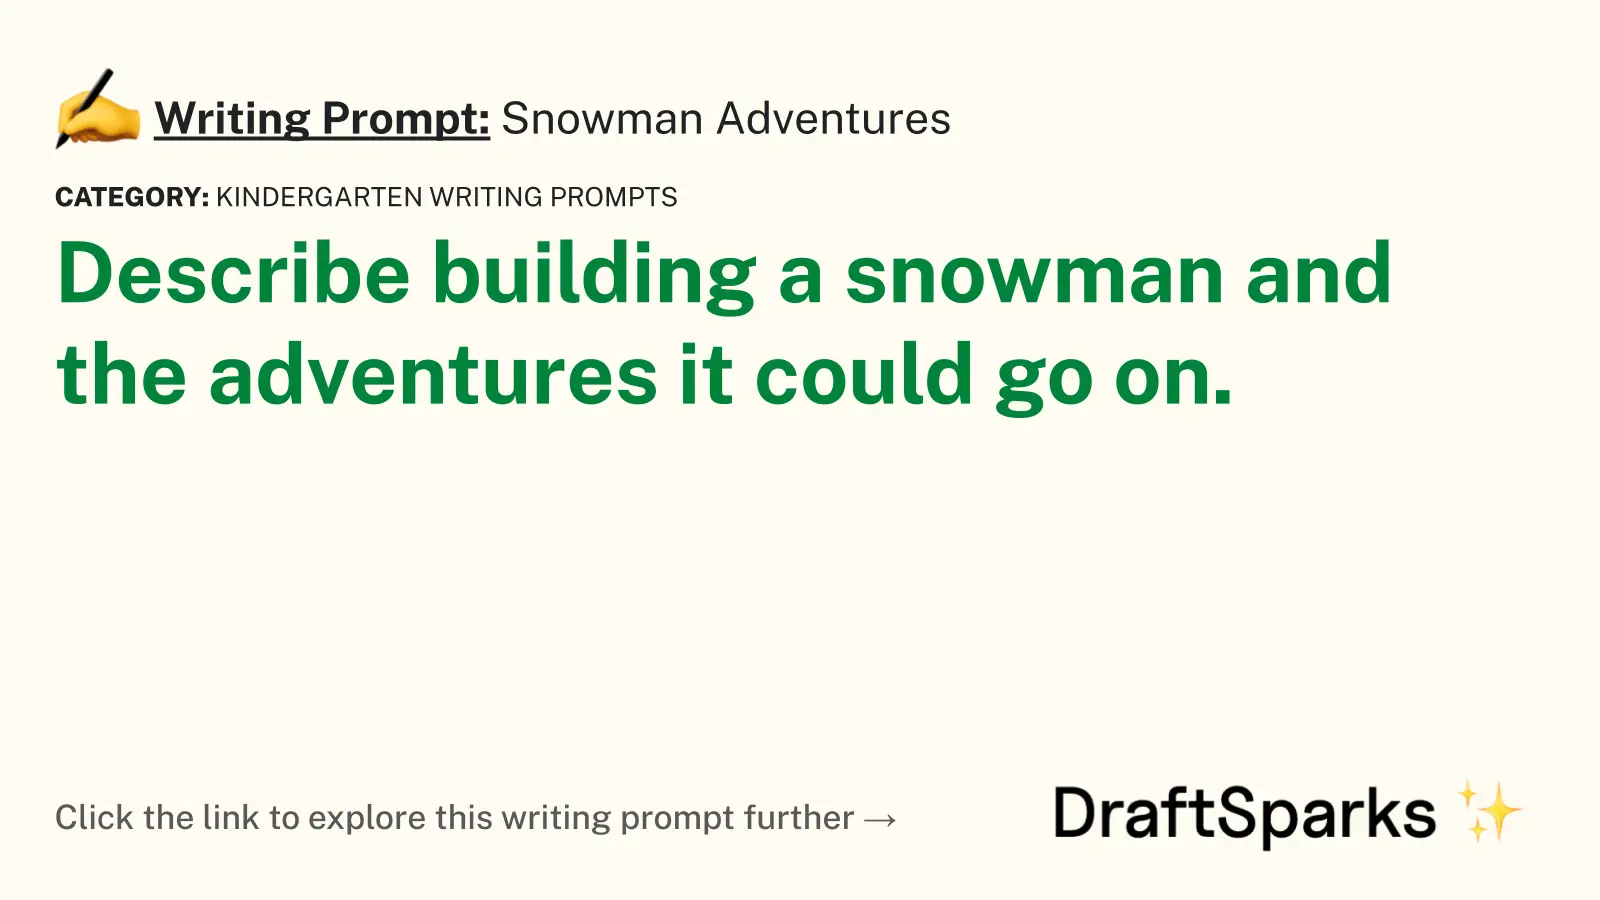 Snowman Adventures